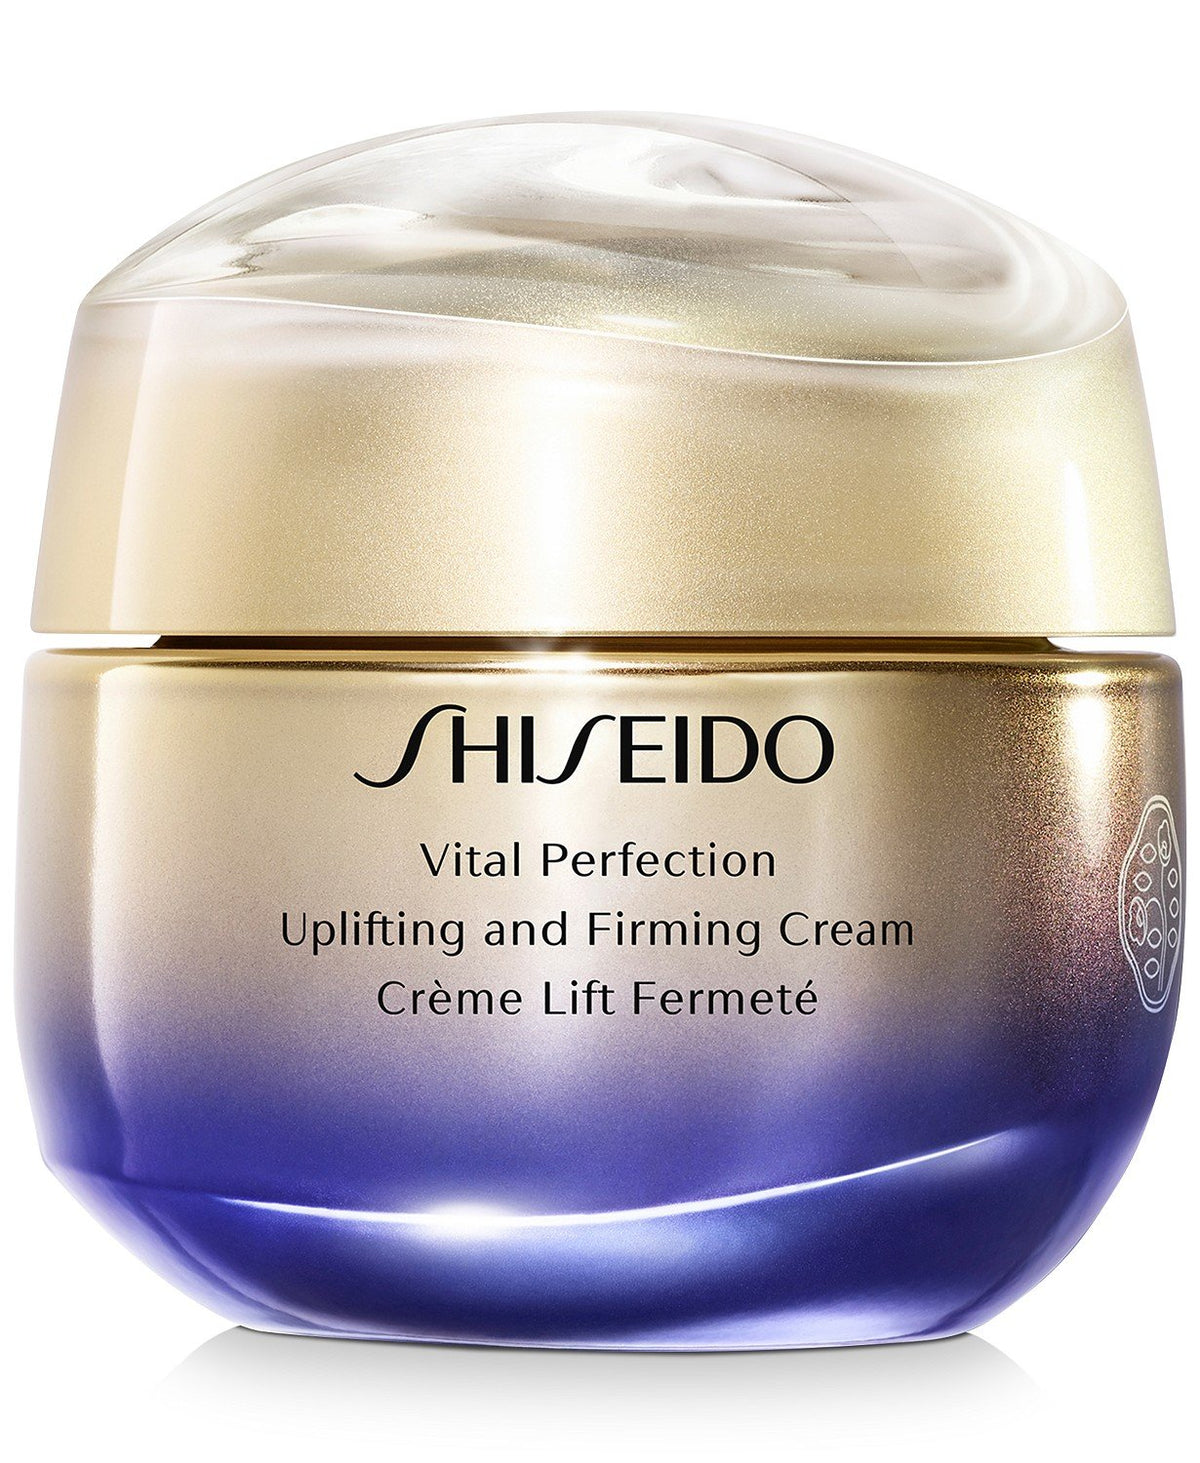 Shiseido Vital Perfection Uplifting and Firming Cream - eCosmeticWorld